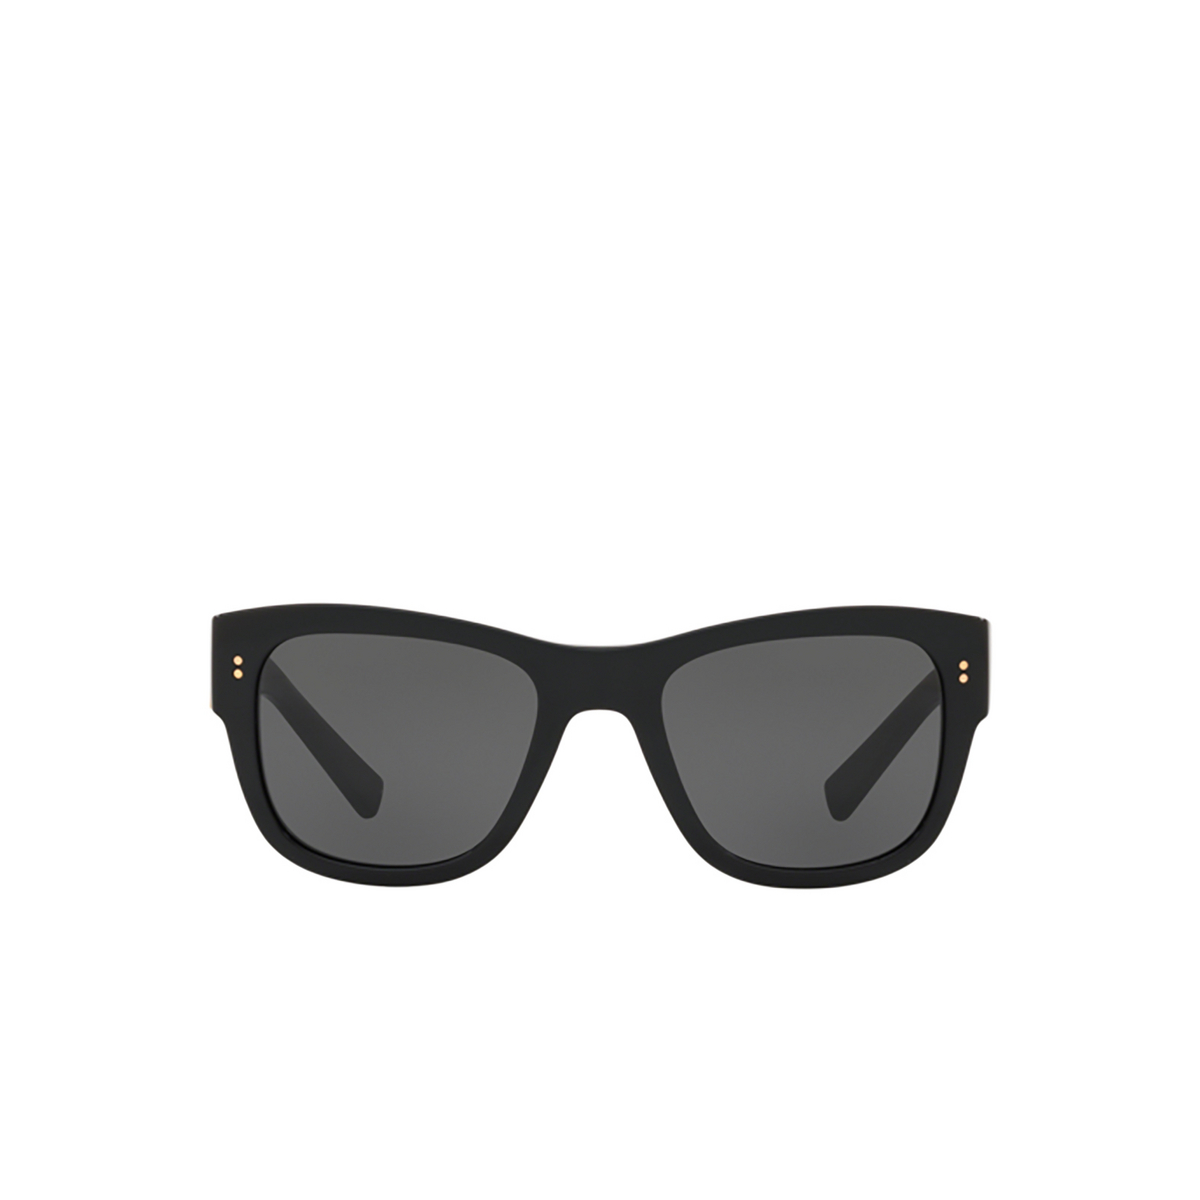 Dolce & Gabbana DG4338 Sunglasses 501/87 Black - front view